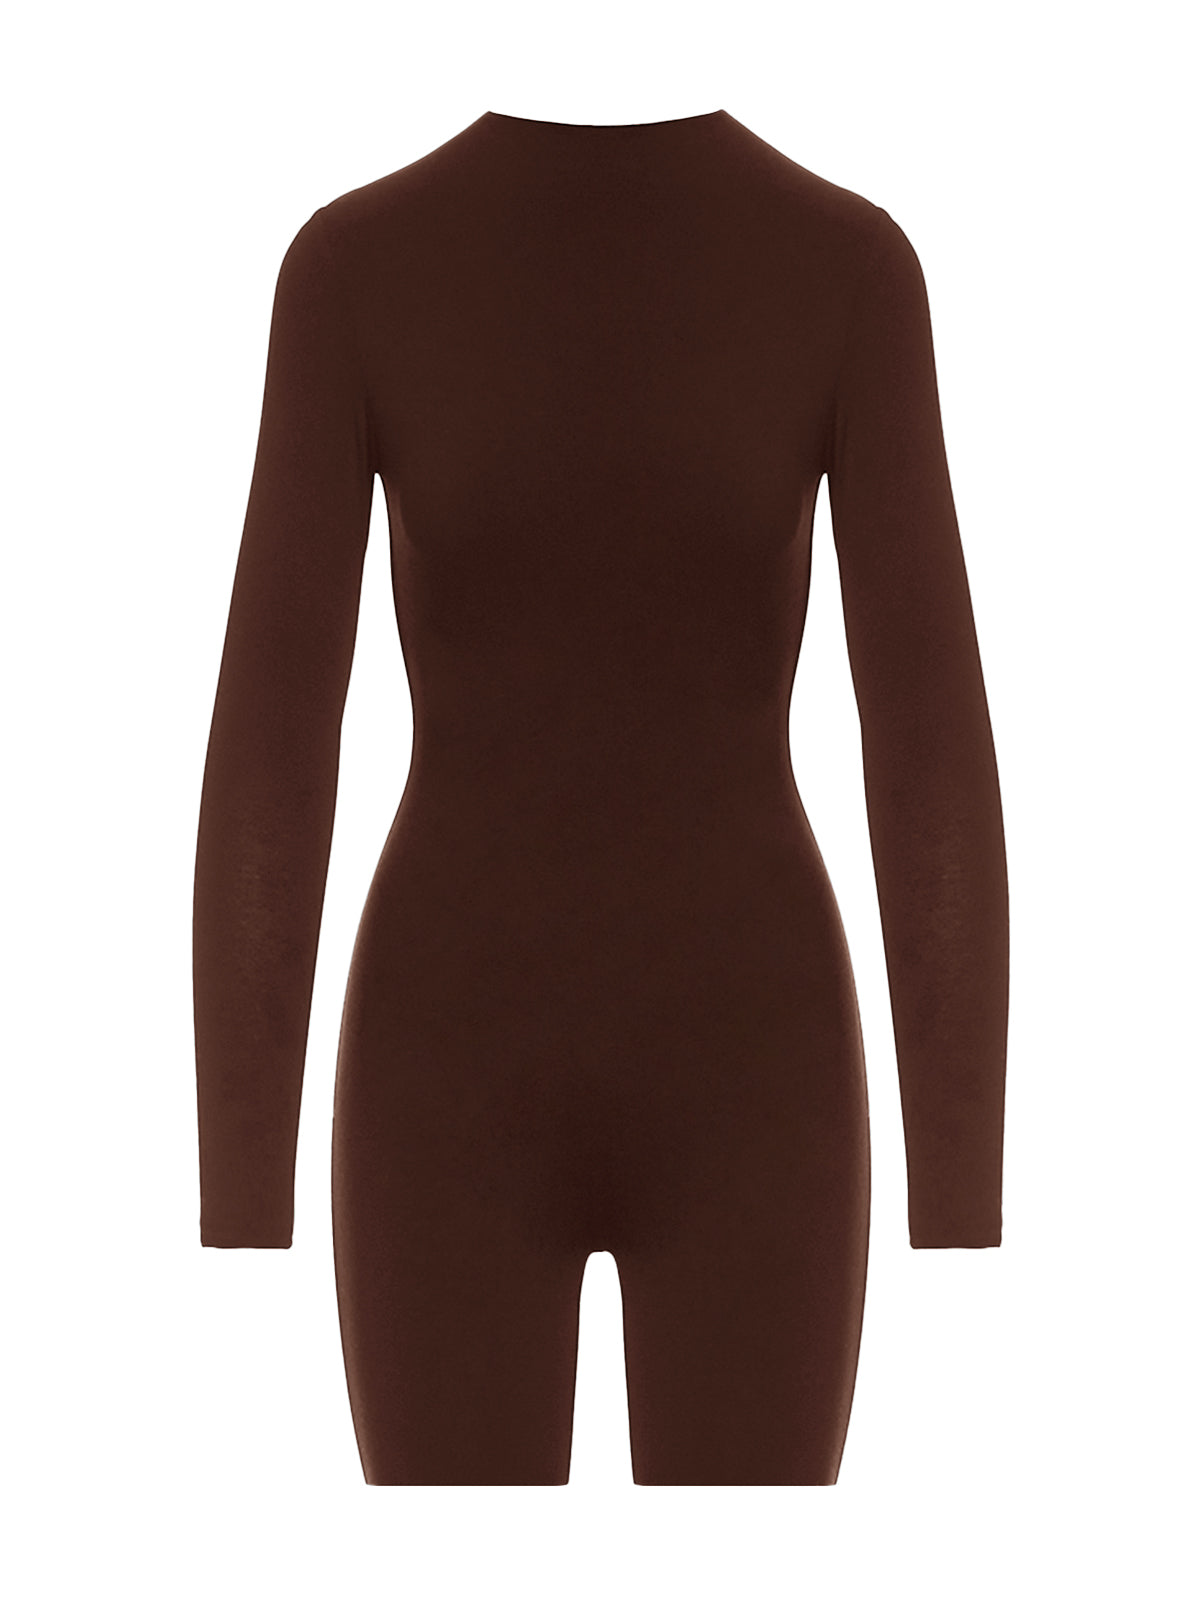 Naked Wardrobe Brown Jumpsuits & Rompers